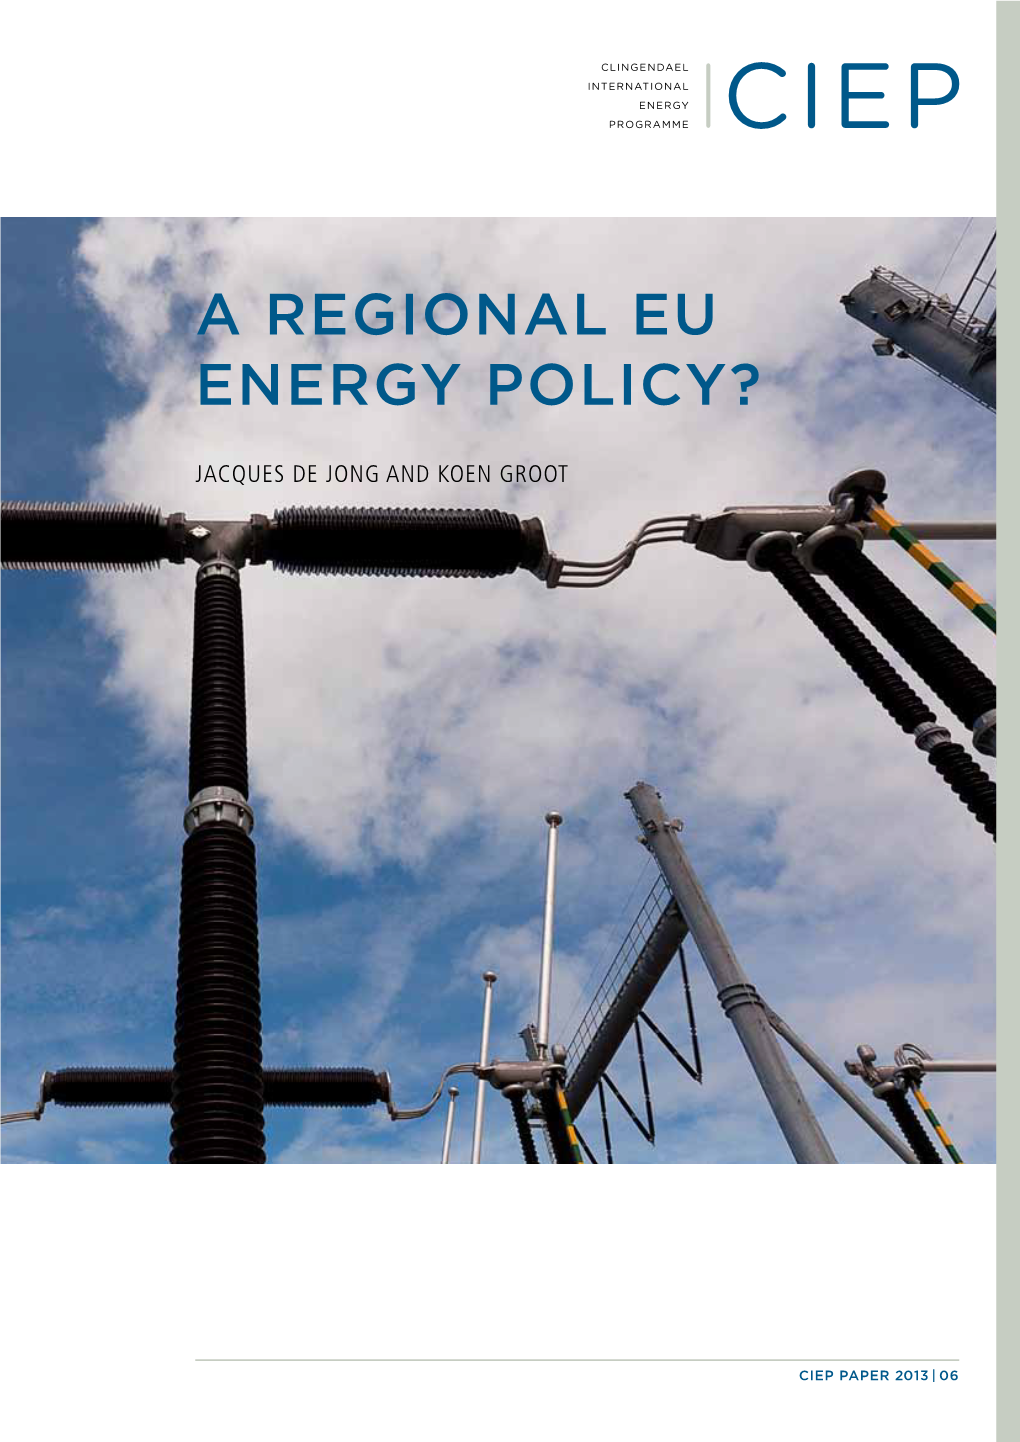 A Regional Eu Energy Policy?